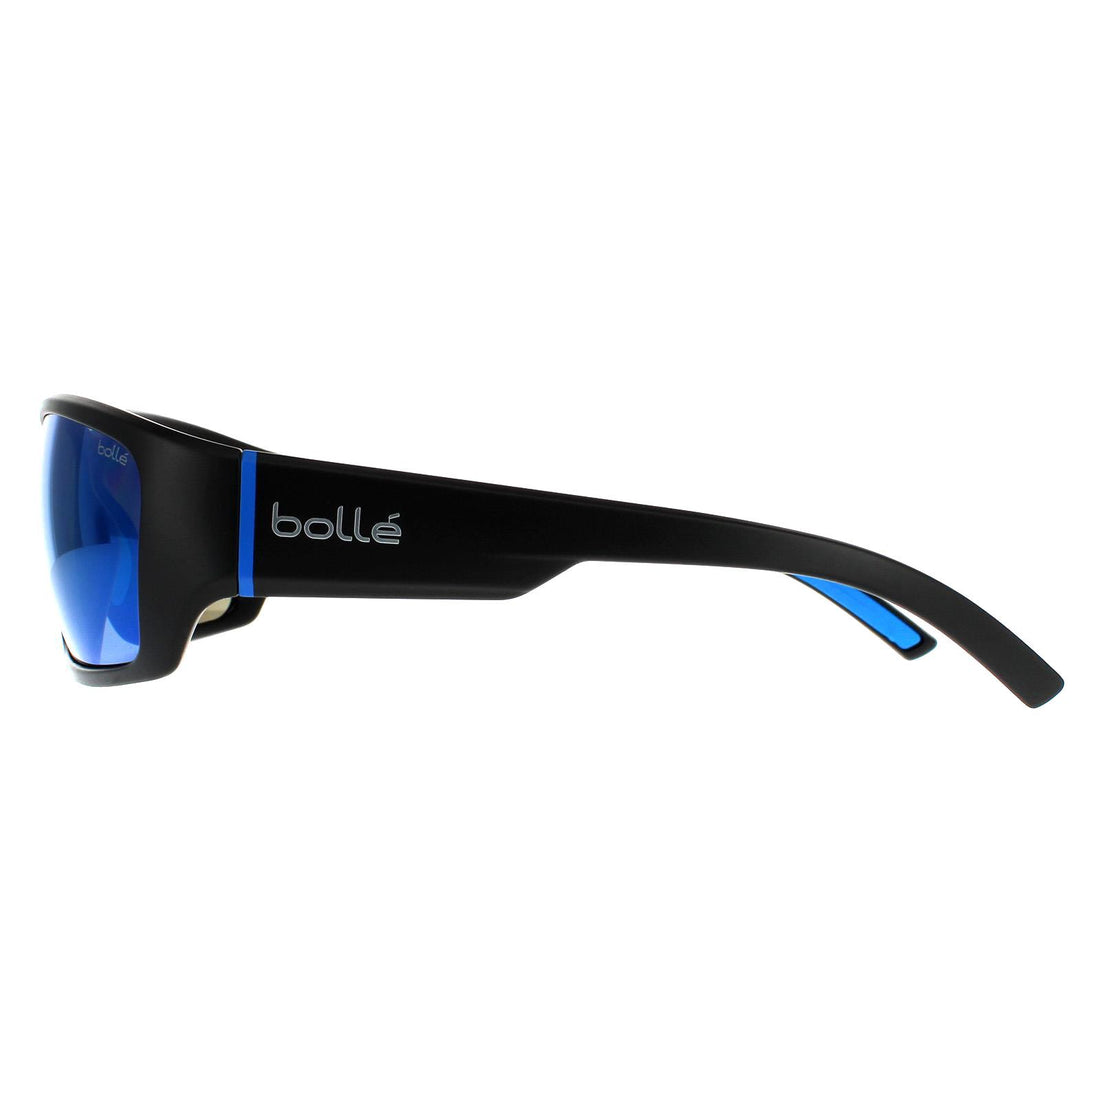 Bolle Ibex Sunglasses